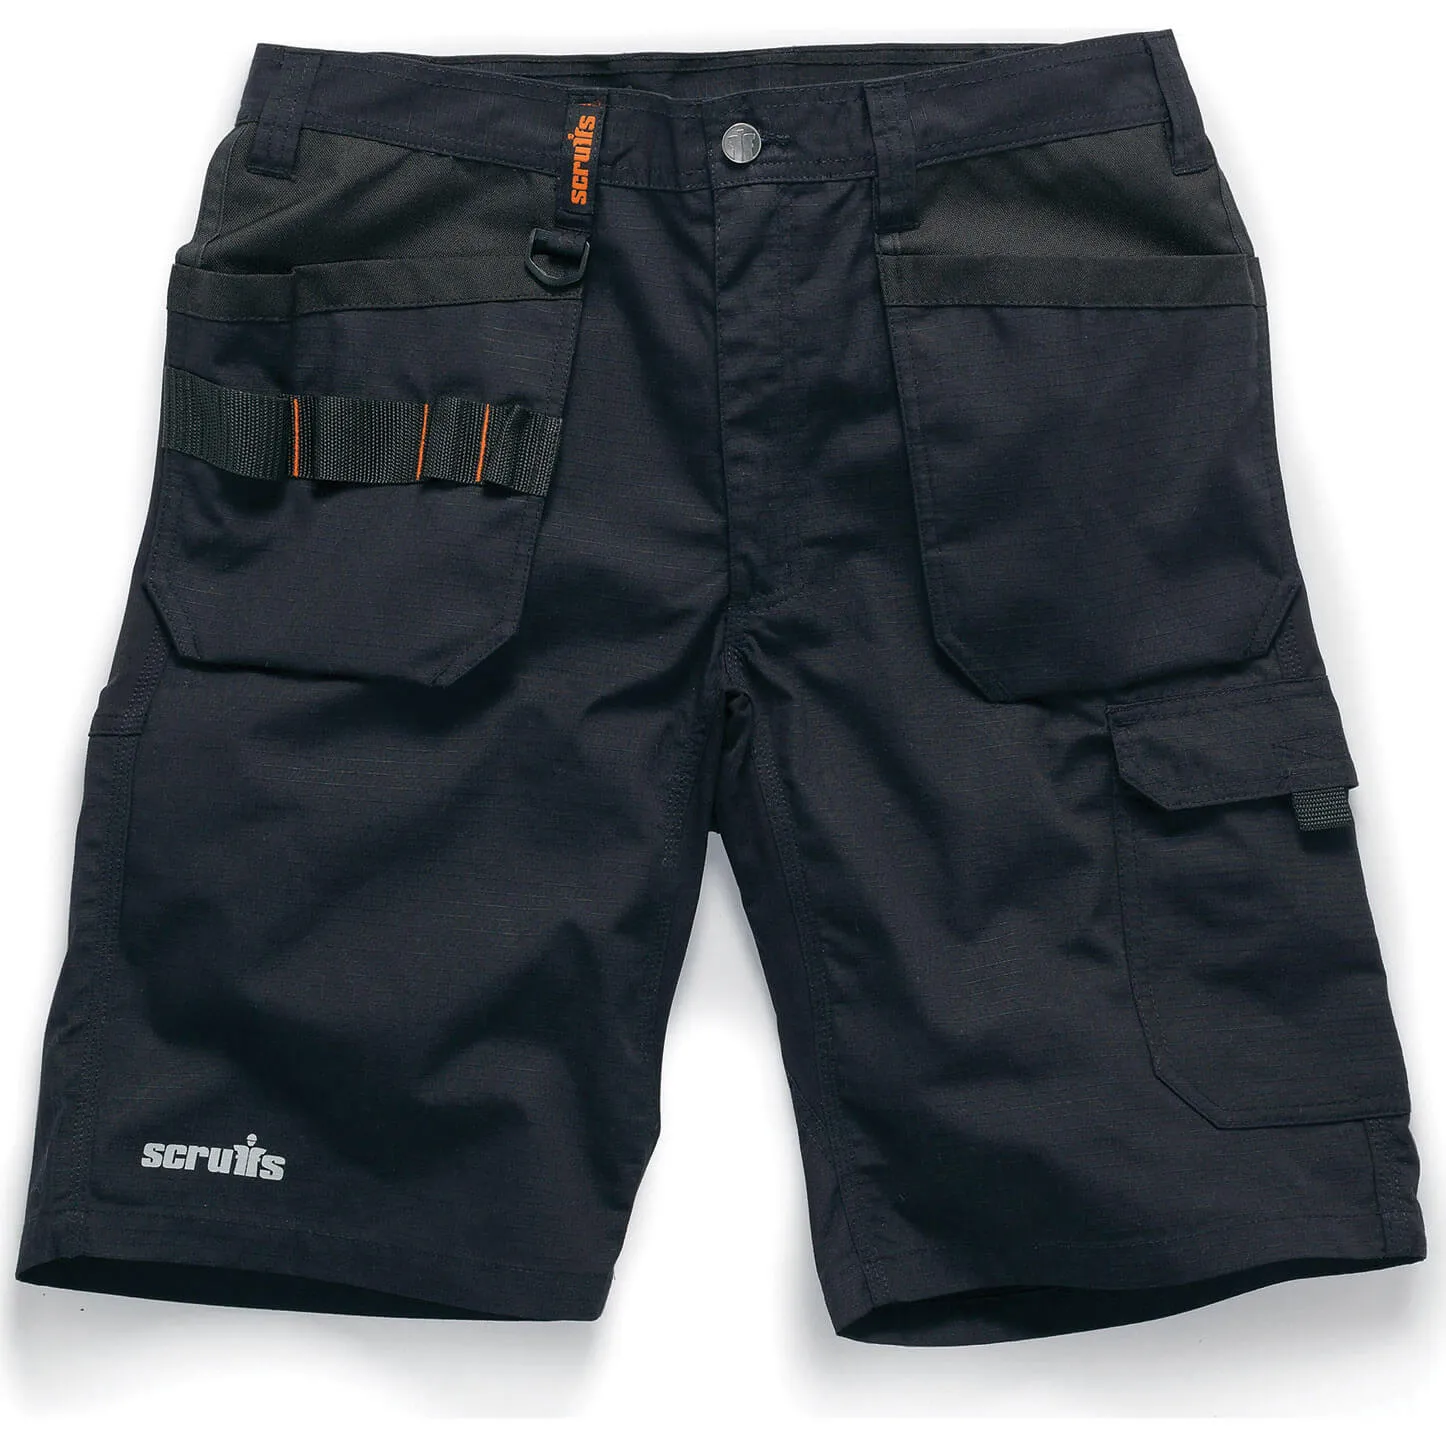 Scruffs Trade Flex Holster Shorts - Black, 34"